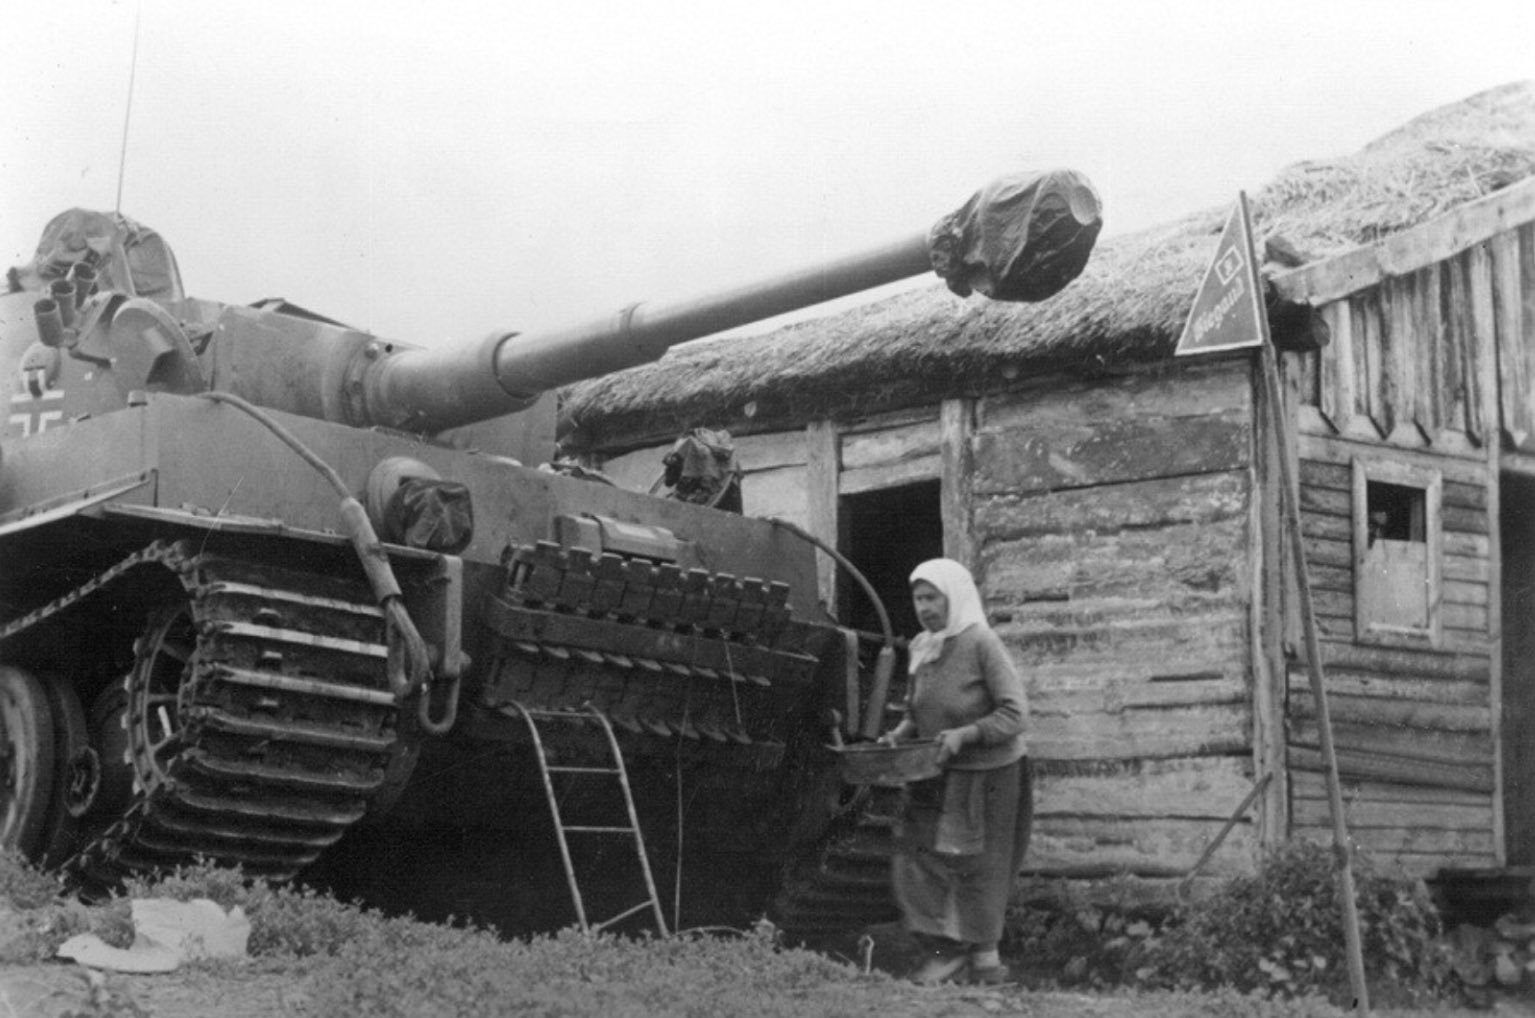 Танк тигр 1943 года. Танк тигр 1943 Курская дуга. Немецкий танк тигр Курская битва. Немецкий танк тигр в 1943. Танк тигр Курск 1943.